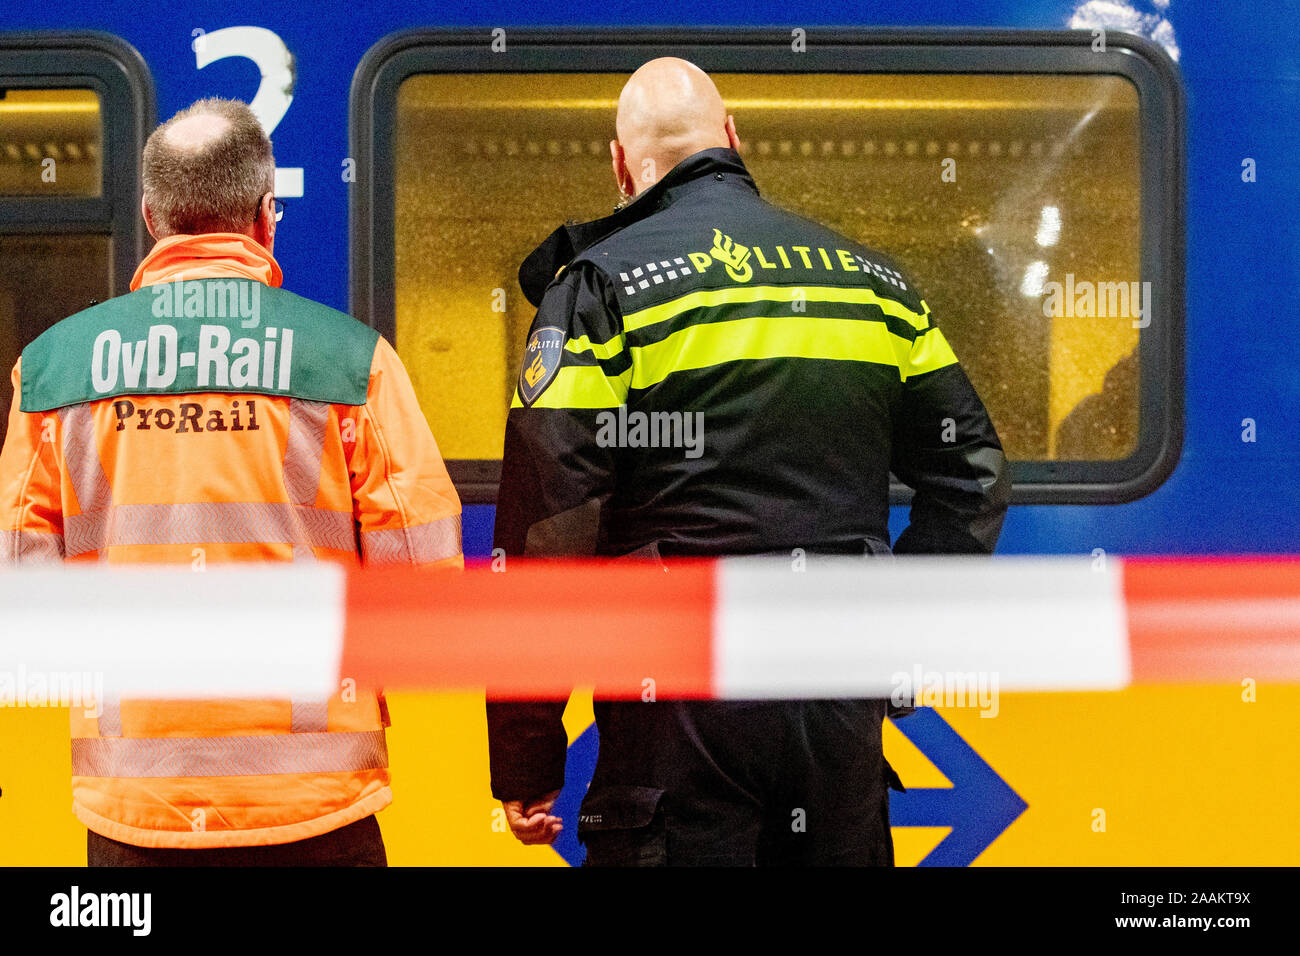 Breda, Netherlands. 22nd Nov, 2019. BREDA, Central station, 22-11-2019, Possible attack on a train betweem Gilze Rijen and Breda with a gun. Credit: Pro Shots/Alamy Live News Stock Photo